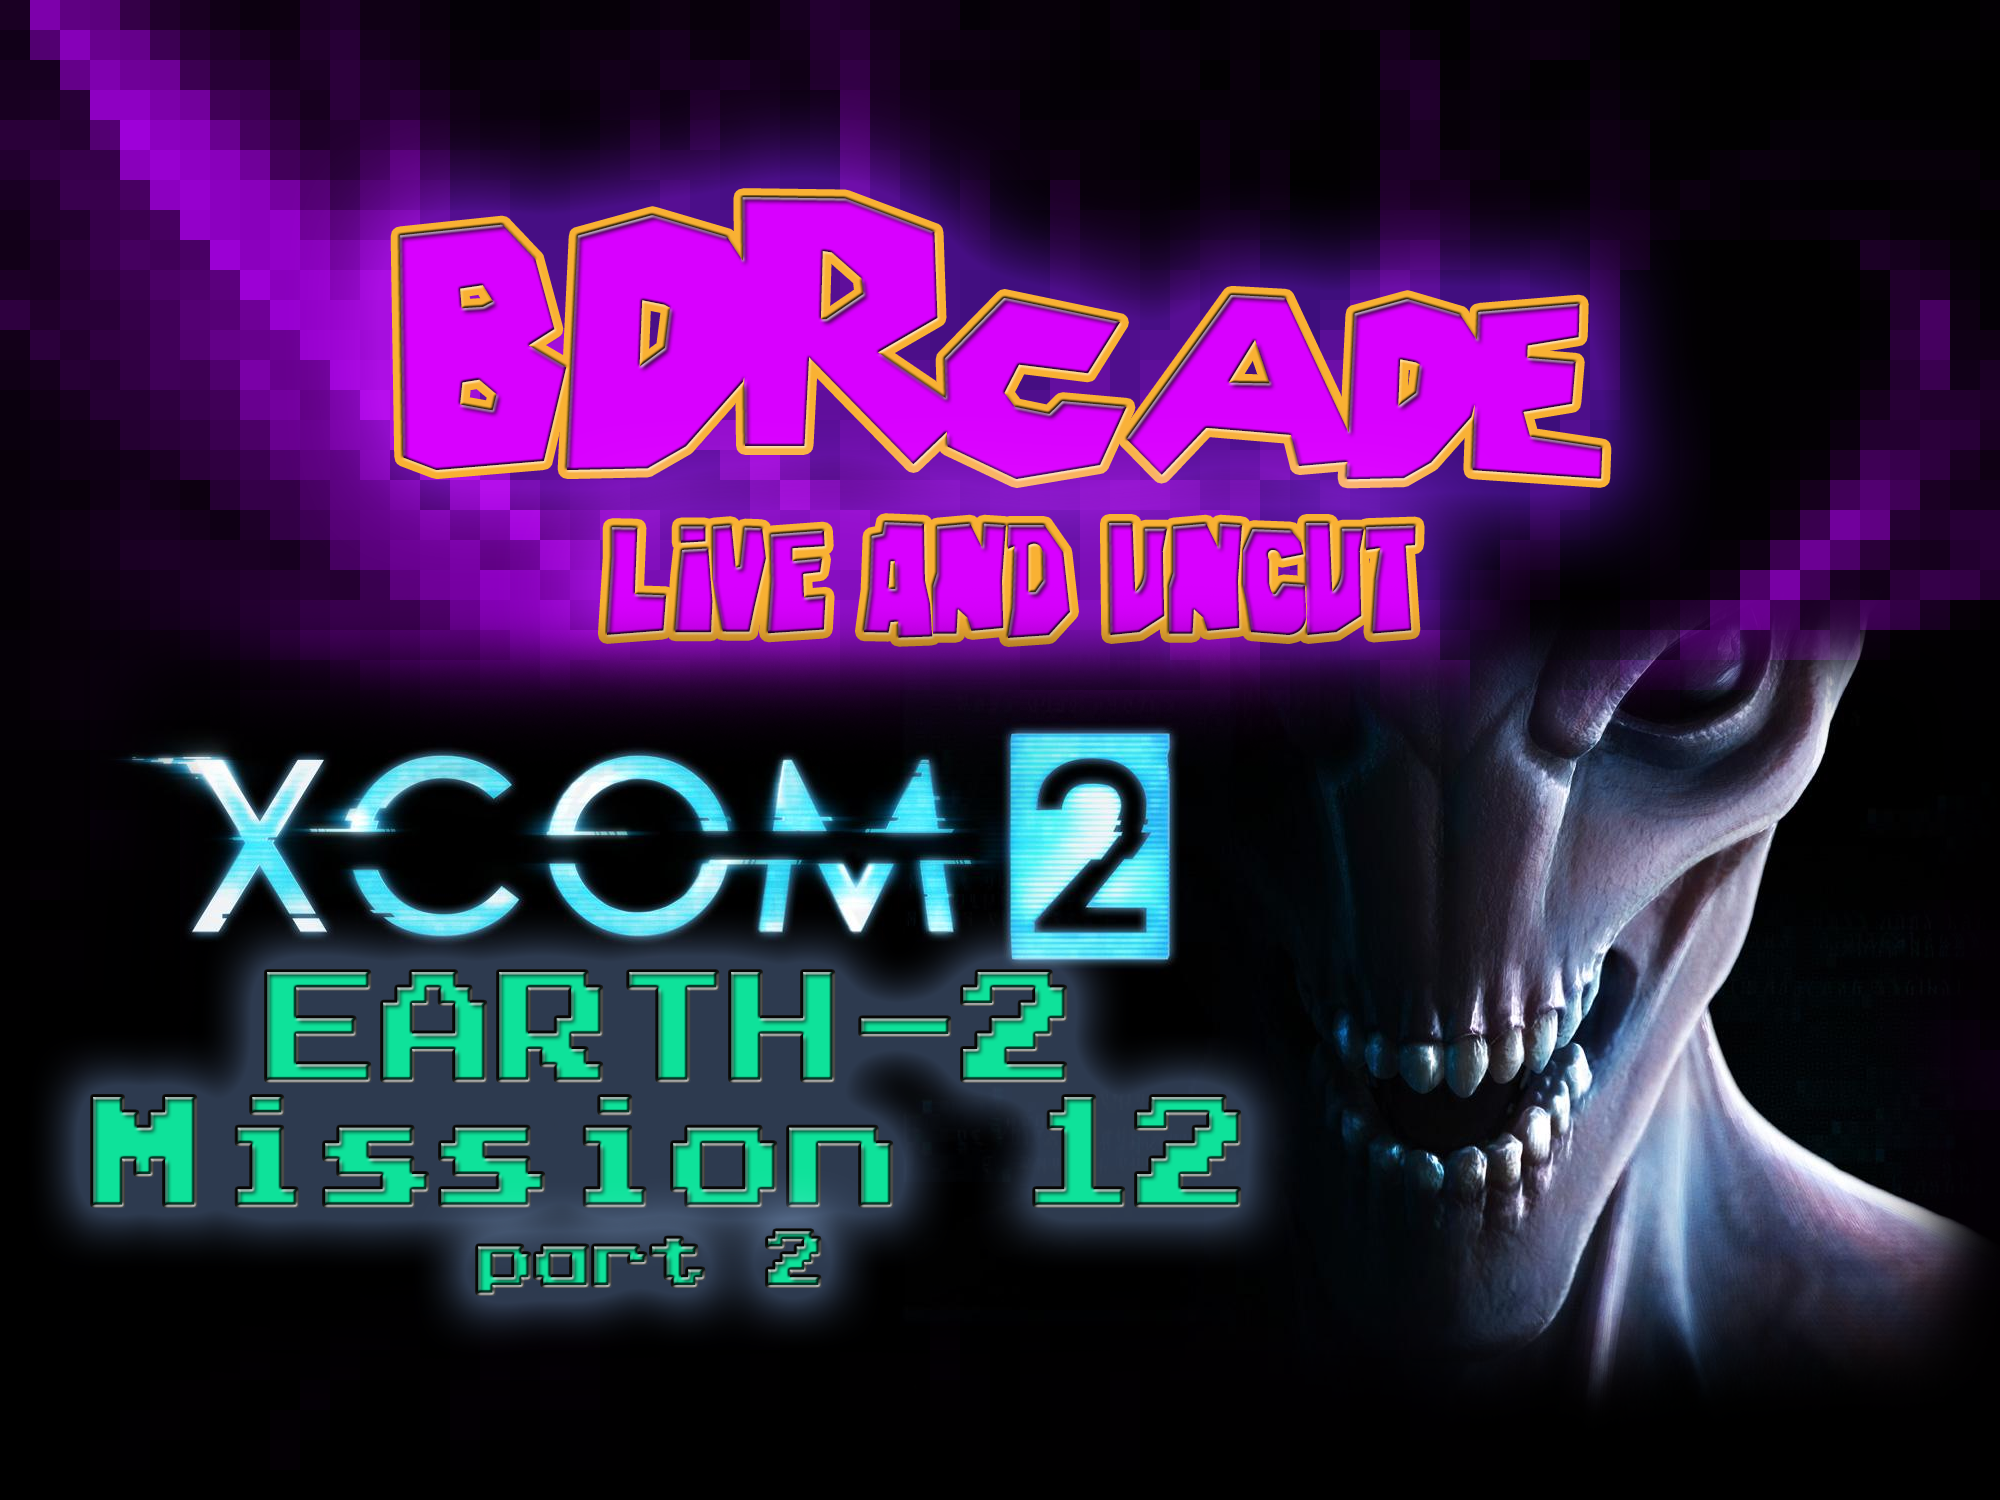 XCOM 2 (Earth-2) : Mission 12 Part 2 – A BDRcade Live Stream